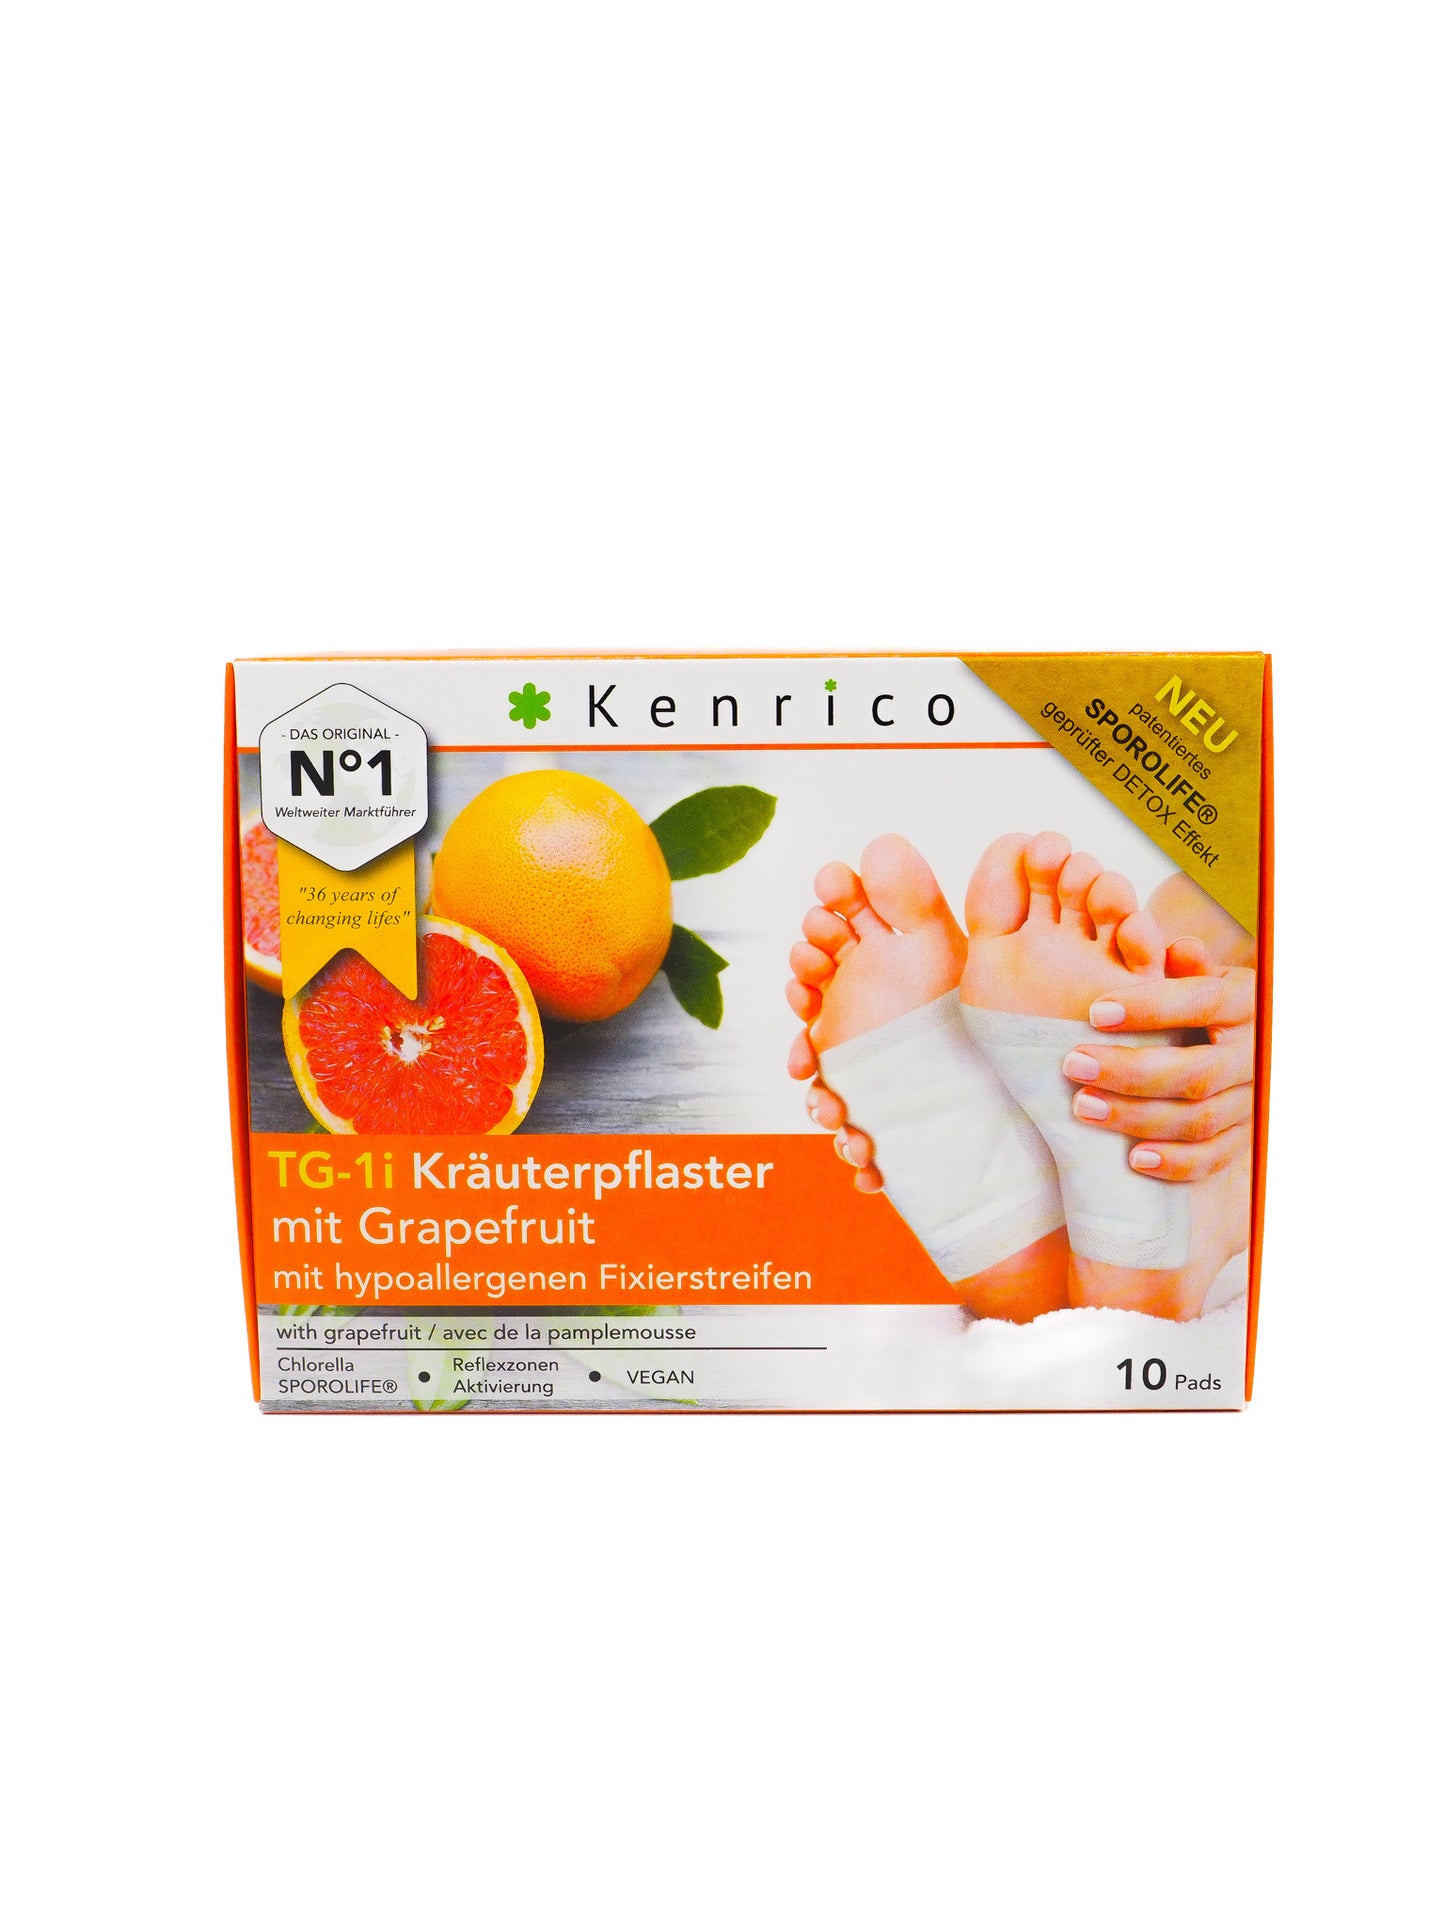 Kenrico® TG-1i Kräuterpflaster mit Grapefruit